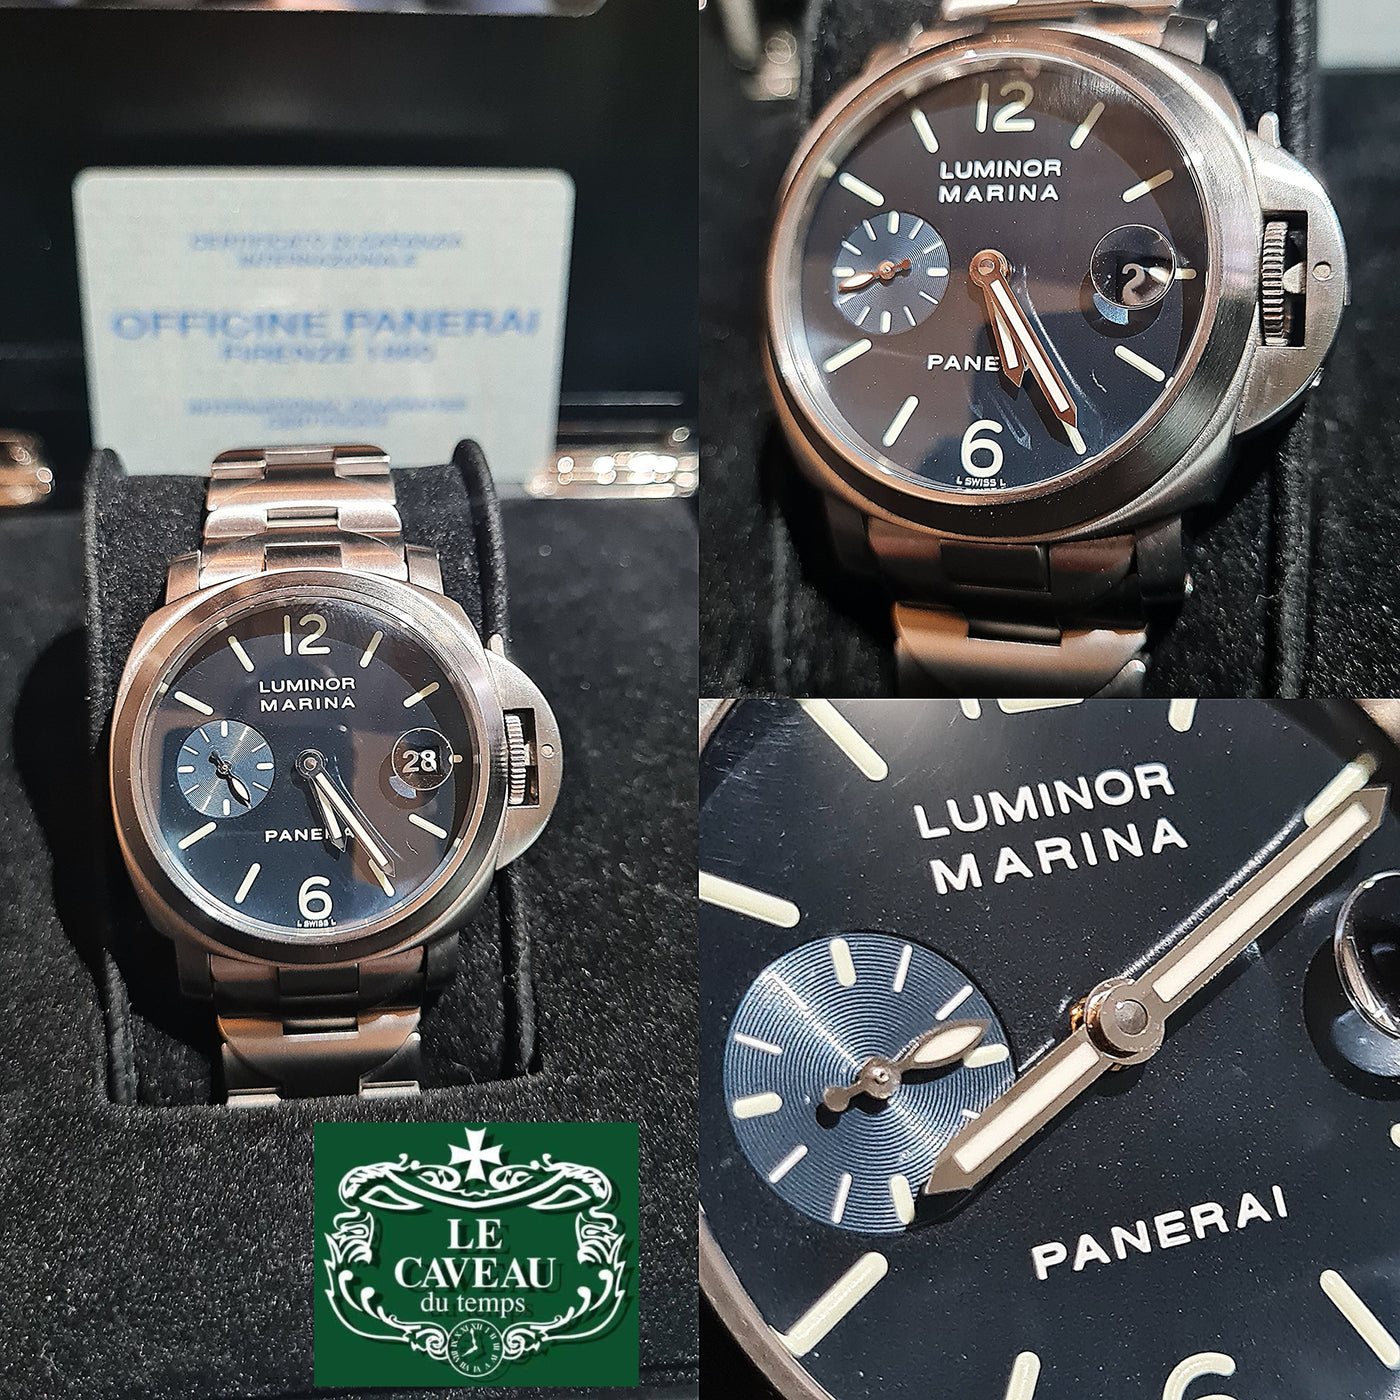 Officine Panerai Luminor Marina OP6560 acciaio braccialato scatola e garanzia originali